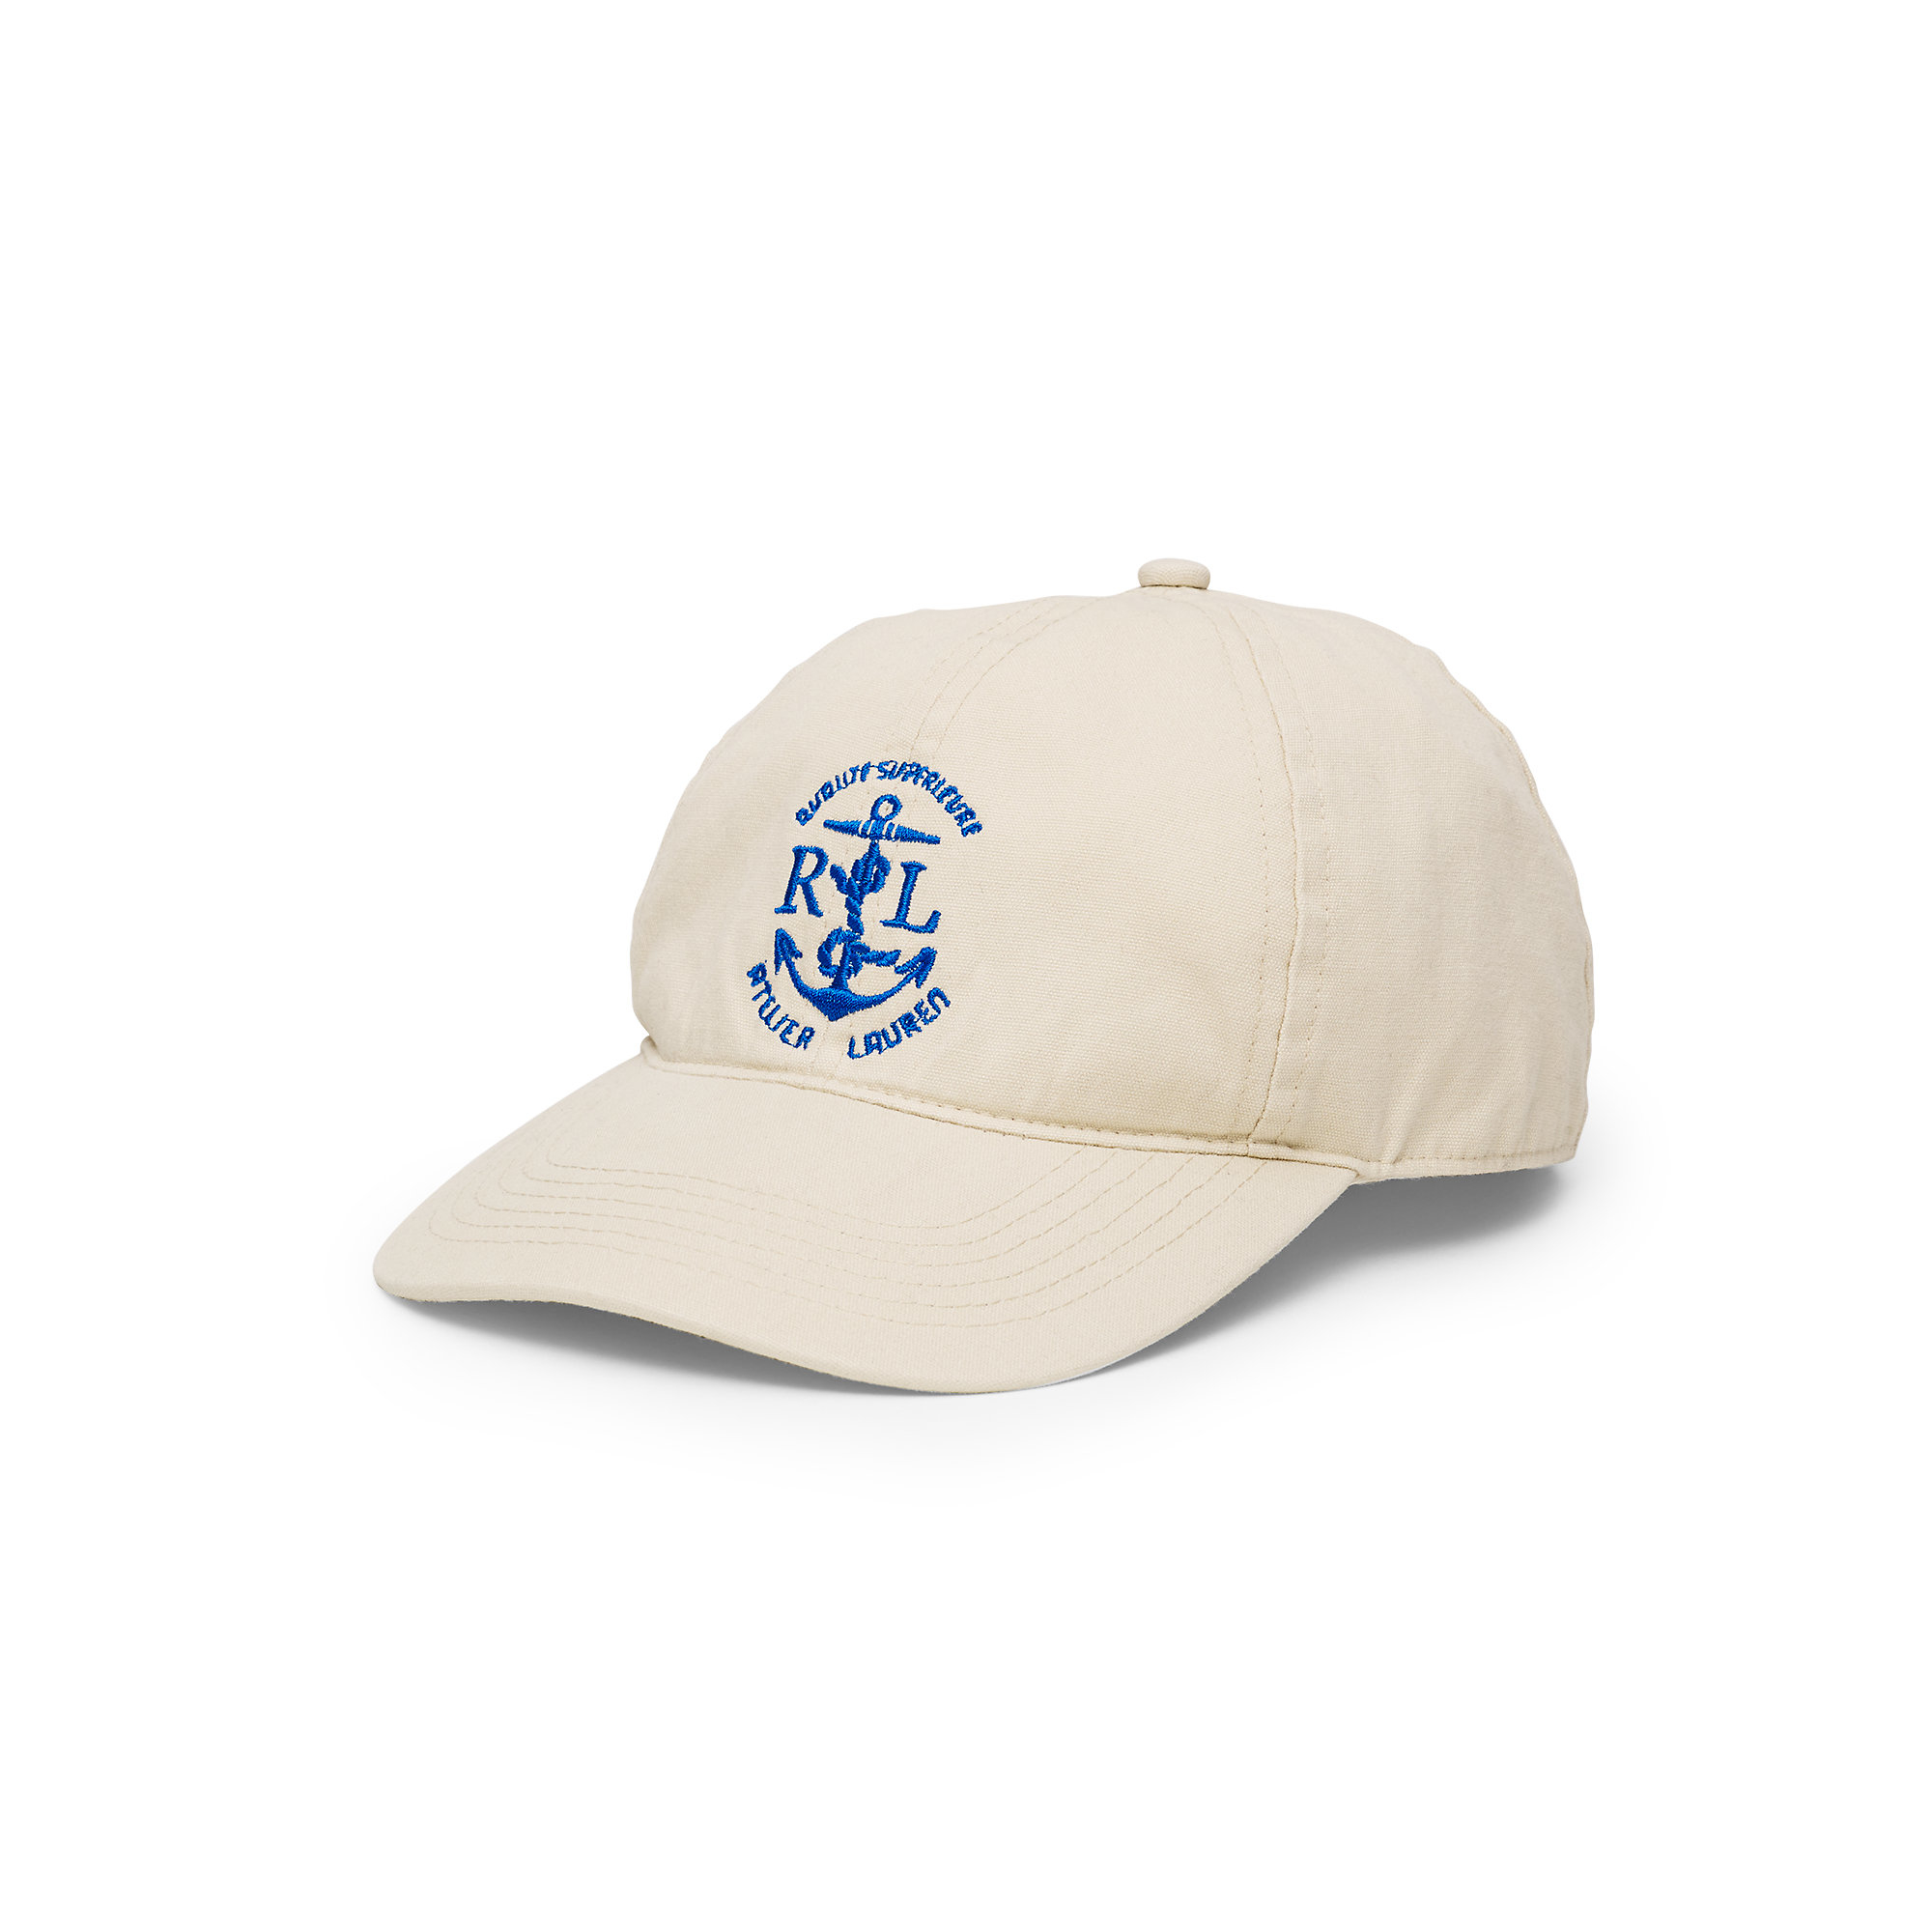 Ralph Lauren Washed Canvas Baseball Cap in Cream (Natural) for Men - Lyst